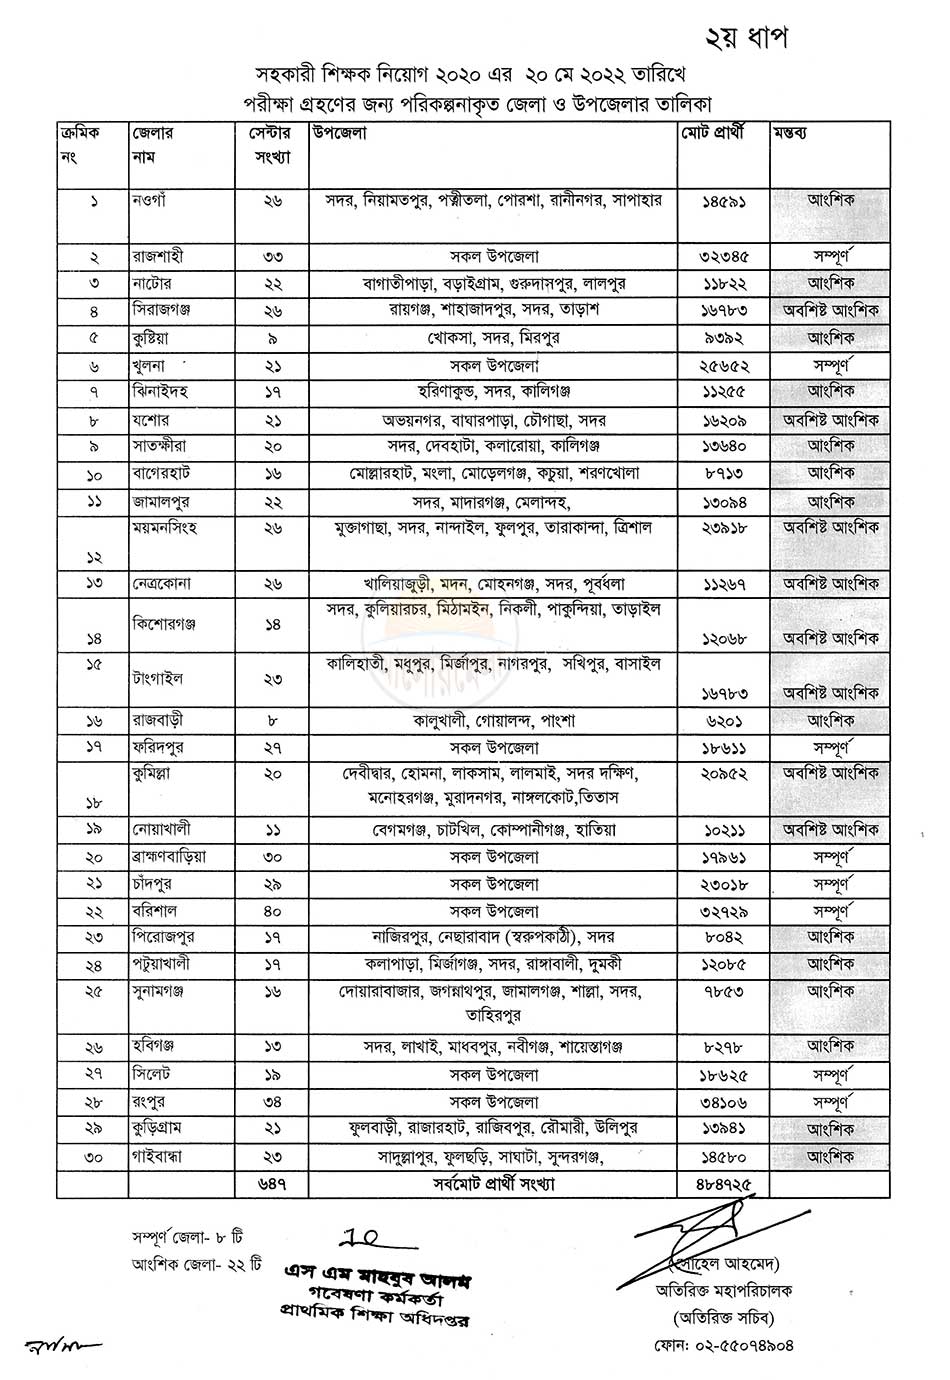 Primary school teacher 2nd phase exam area list